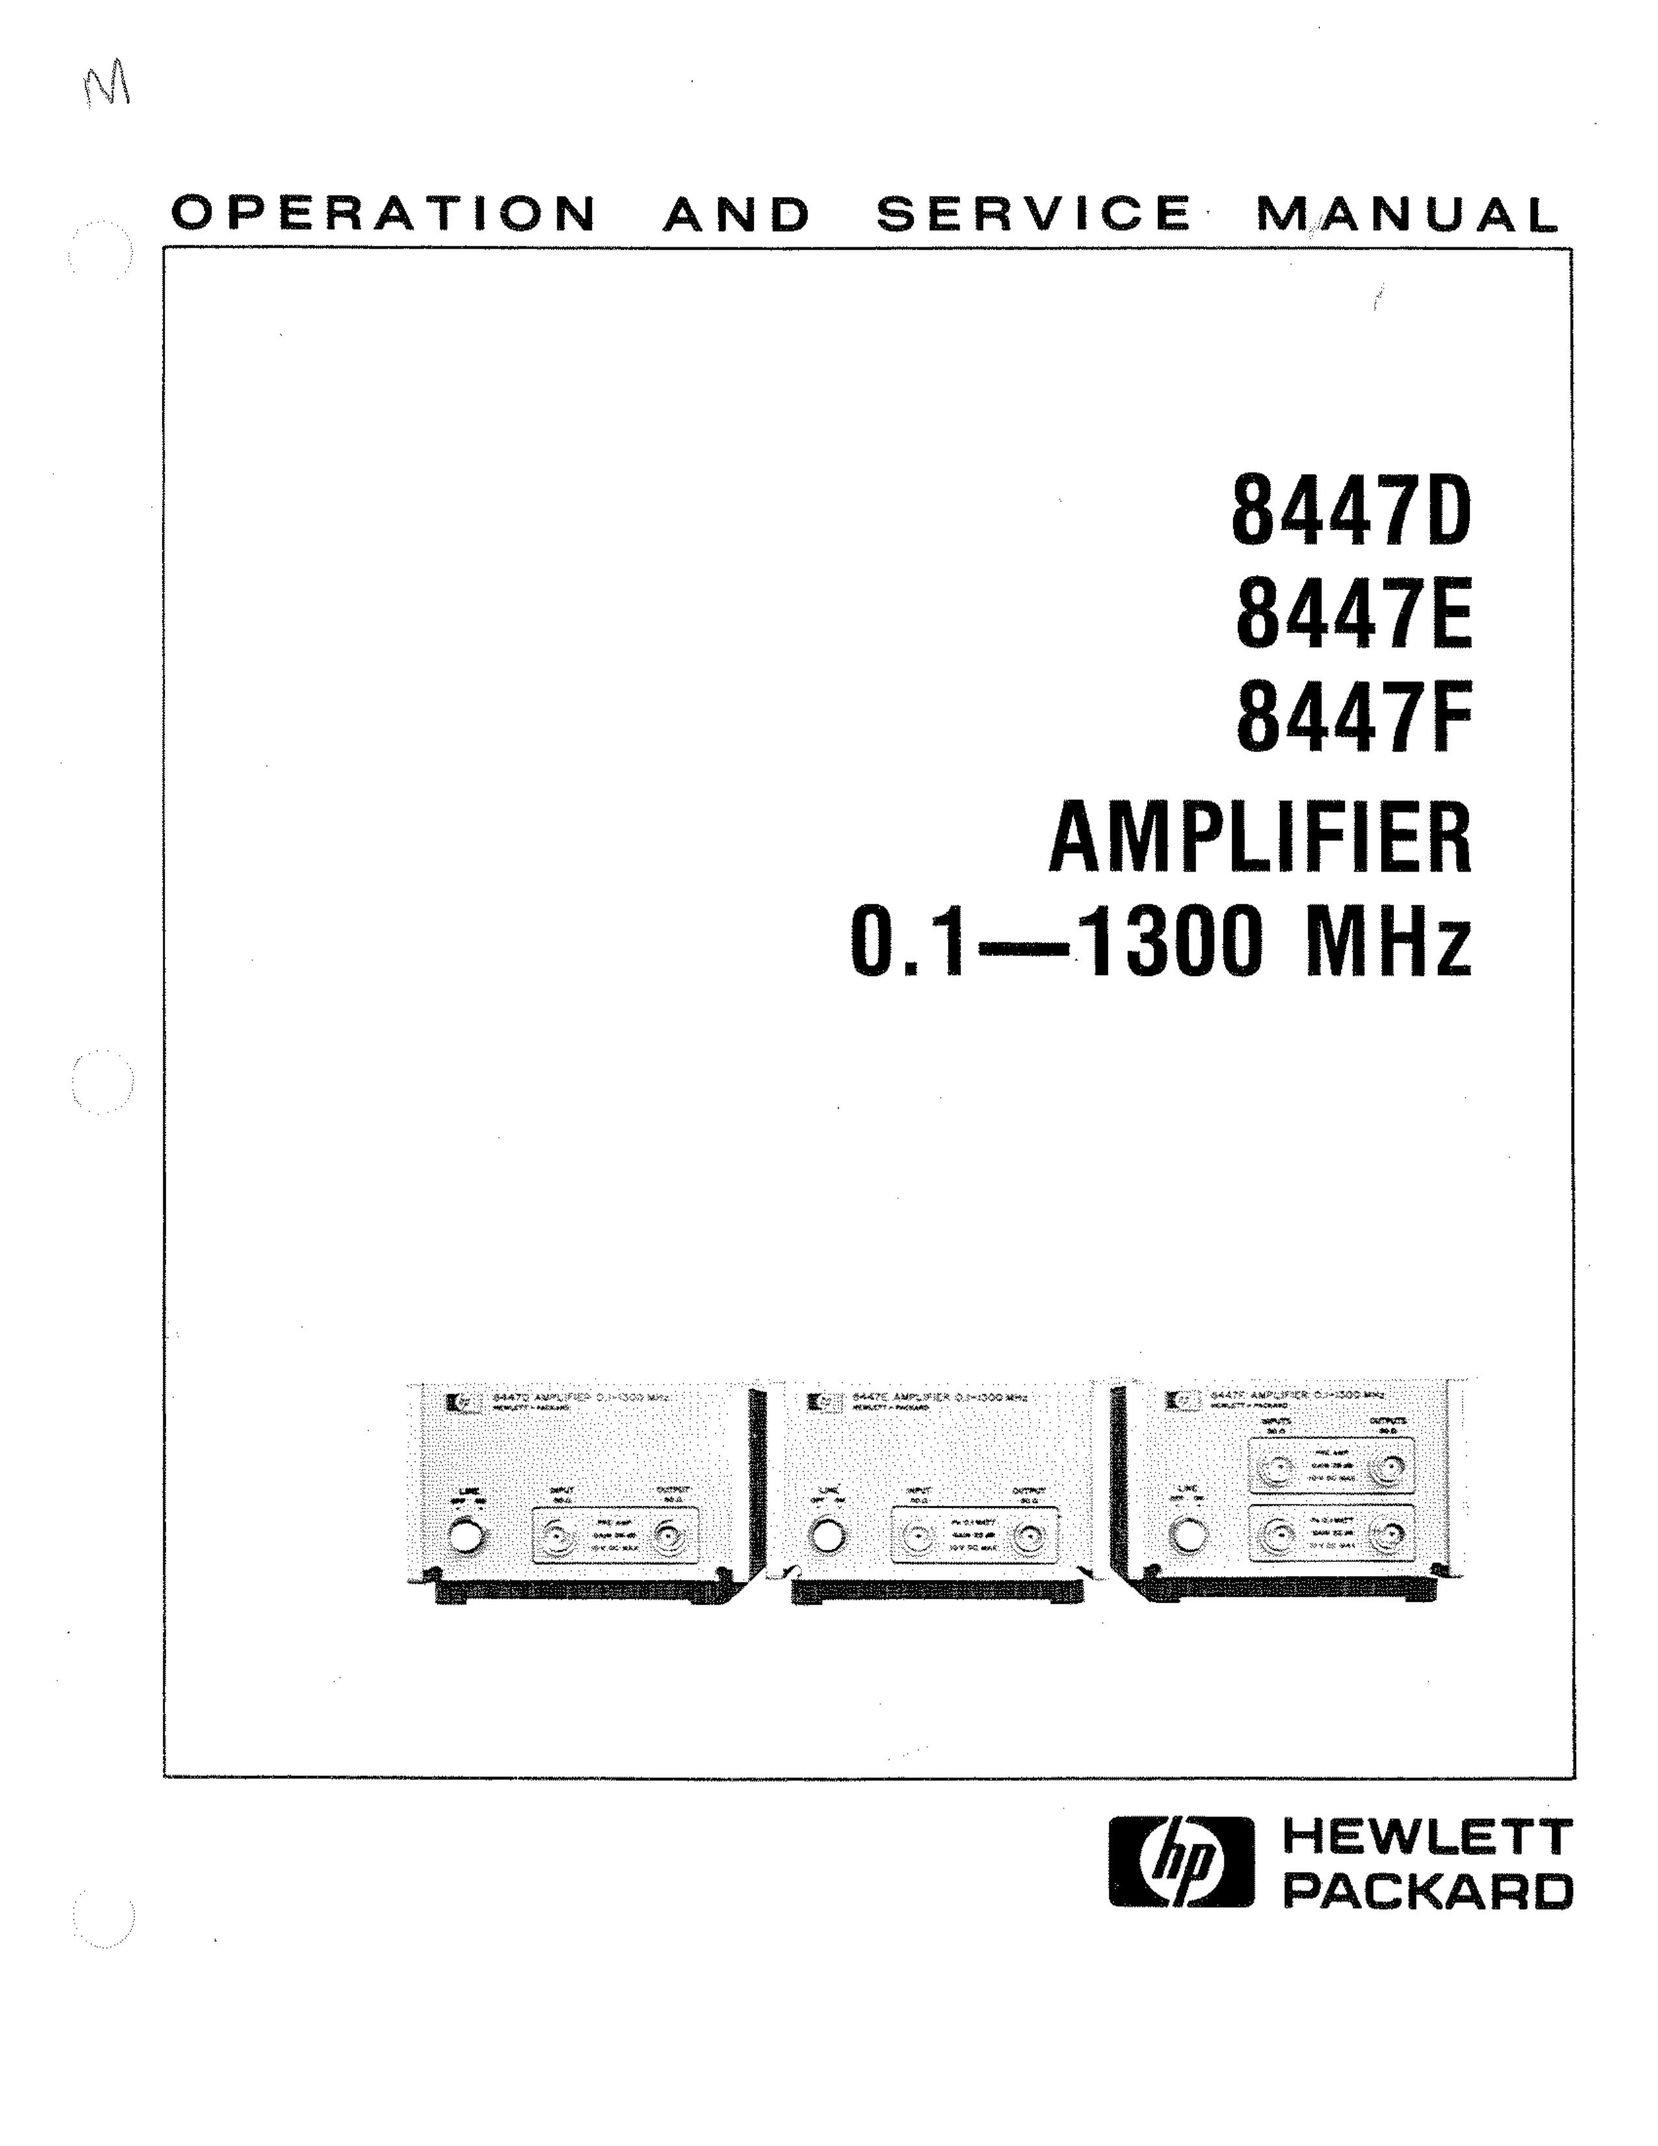 HP (Hewlett-Packard) 8447F Car Amplifier User Manual